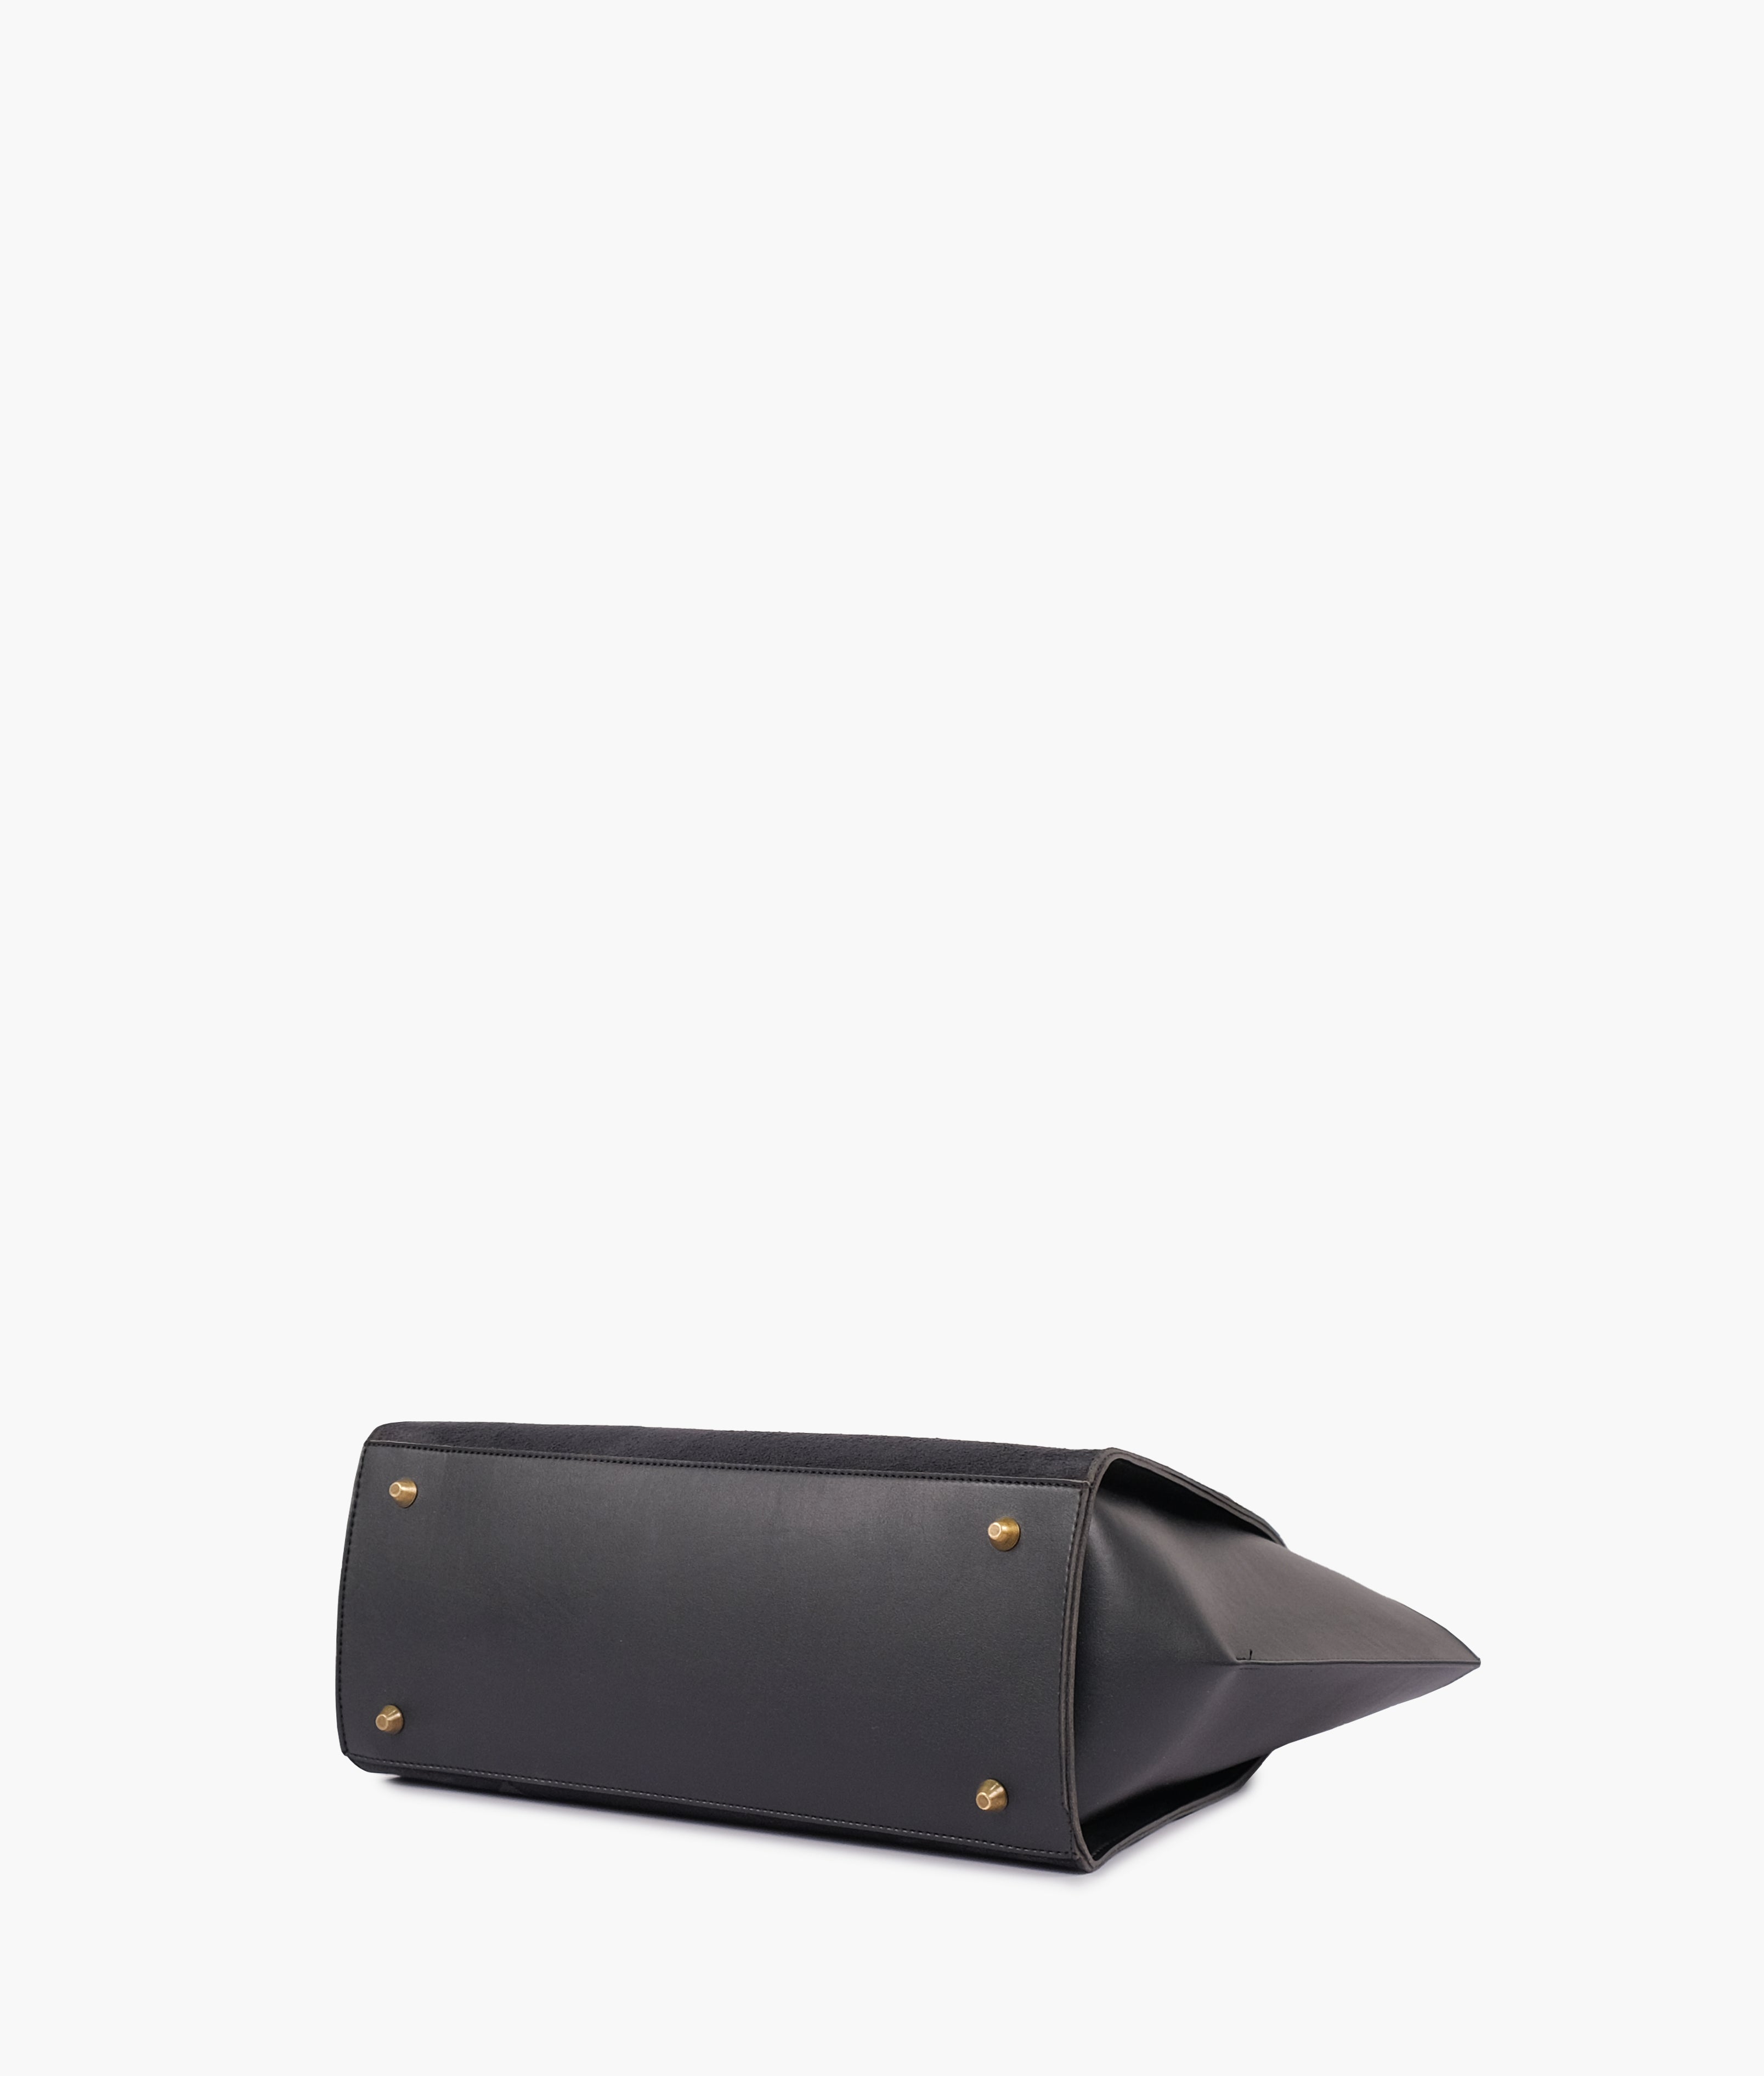 Black suede classic tote bag